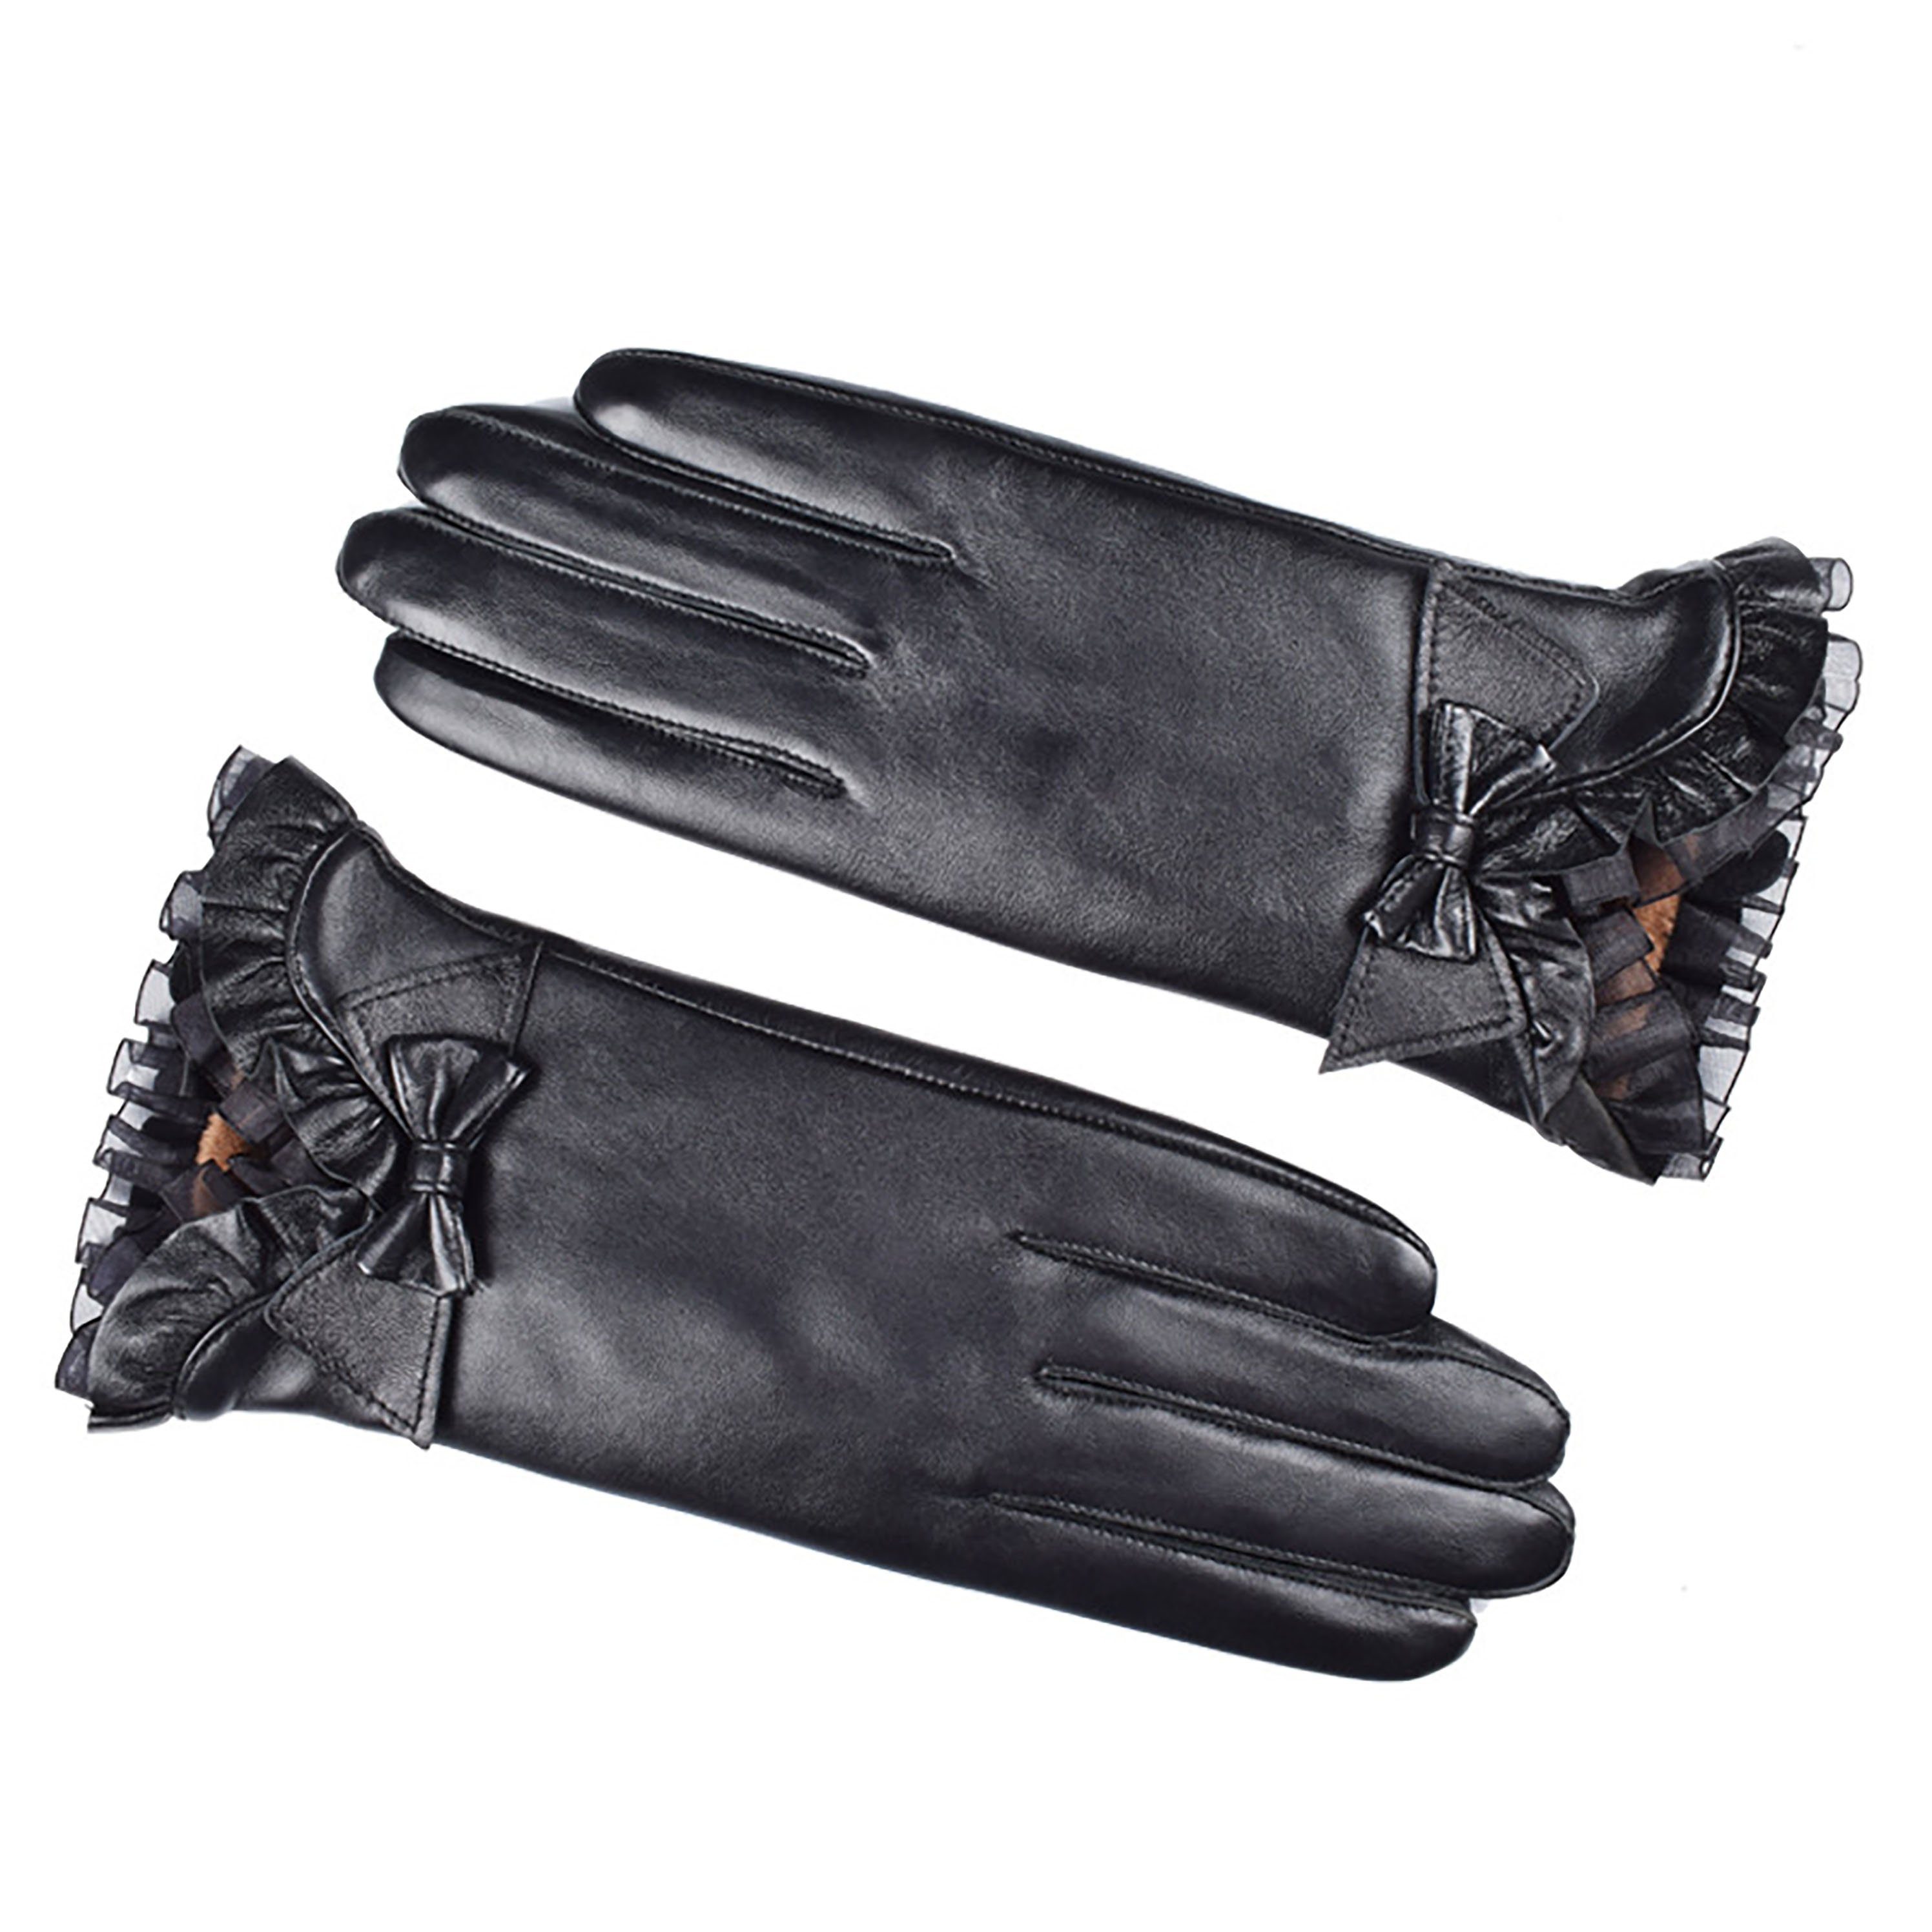 Tapferer Ping PU-Handschuhe Samt und dicke warme Touch Screen Handschuhe